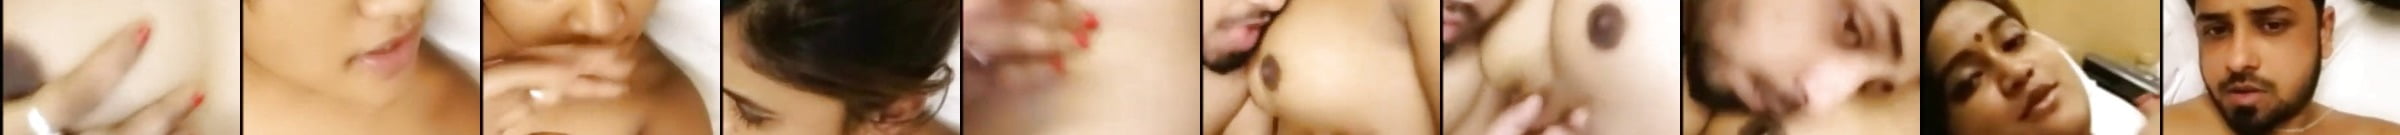 Bangladeshi Model Sex Video 2020 Free Hd Porn 17 Xhamster